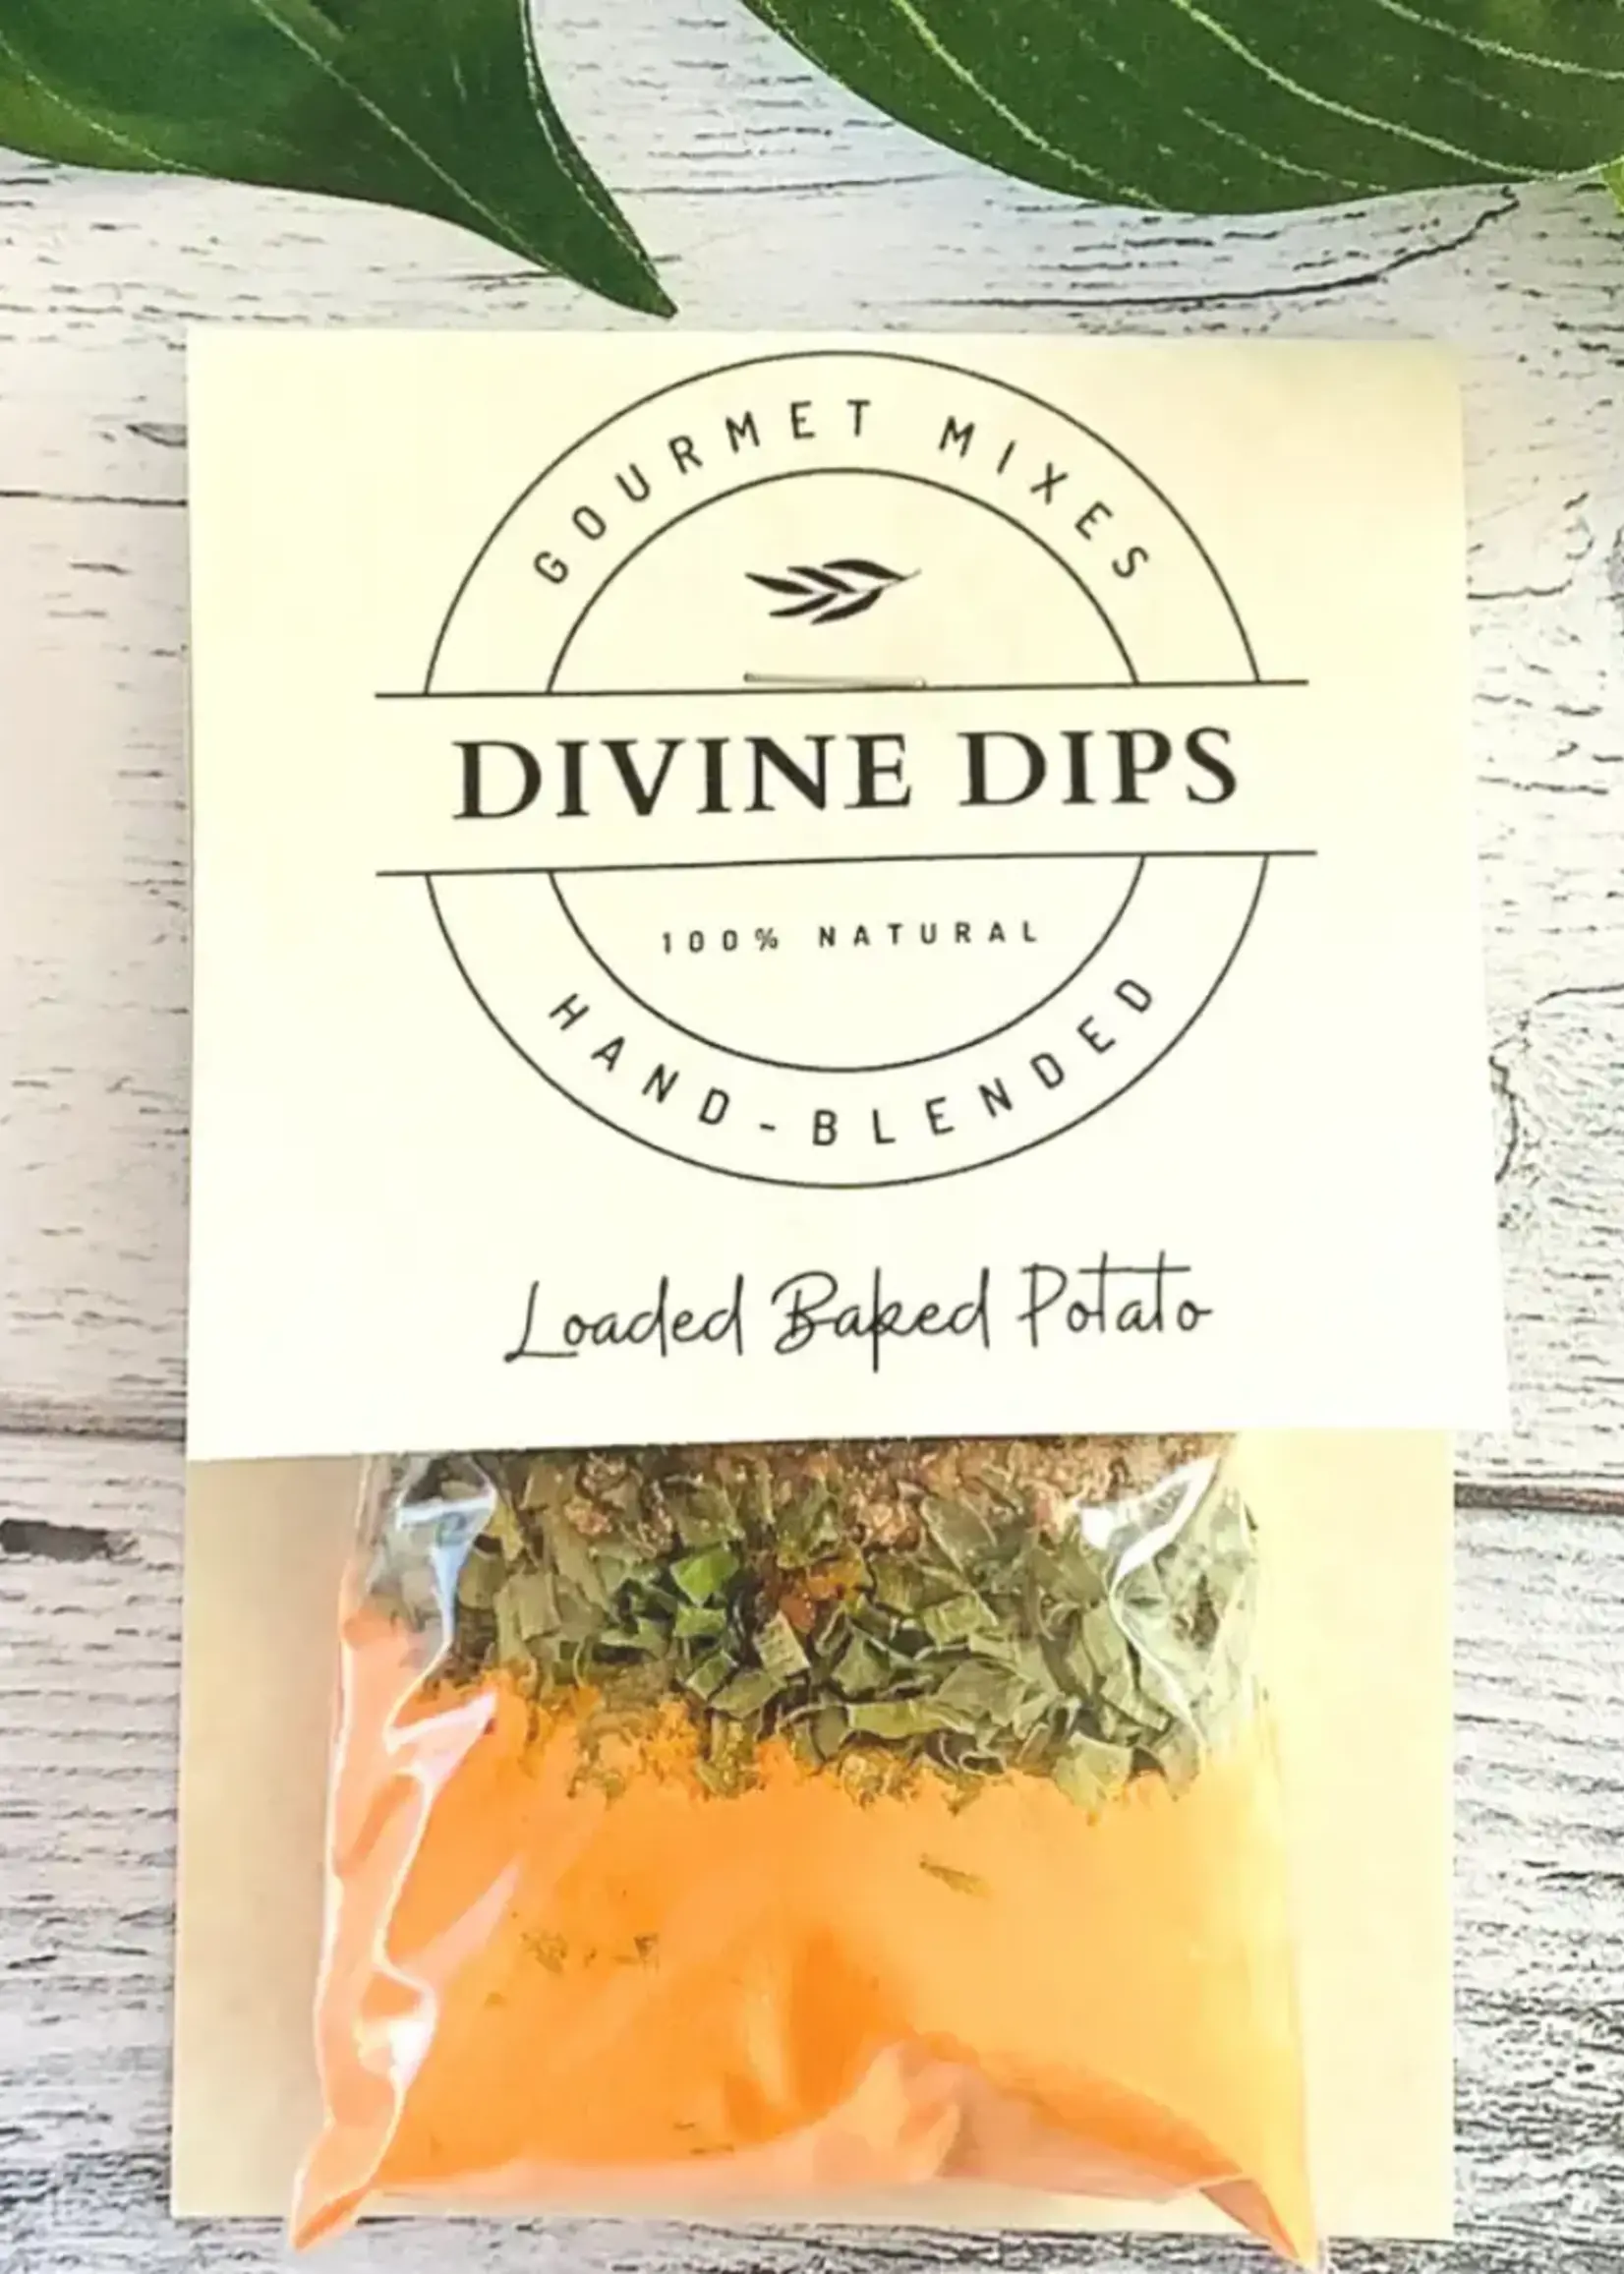 Divine Dips Divine Dips